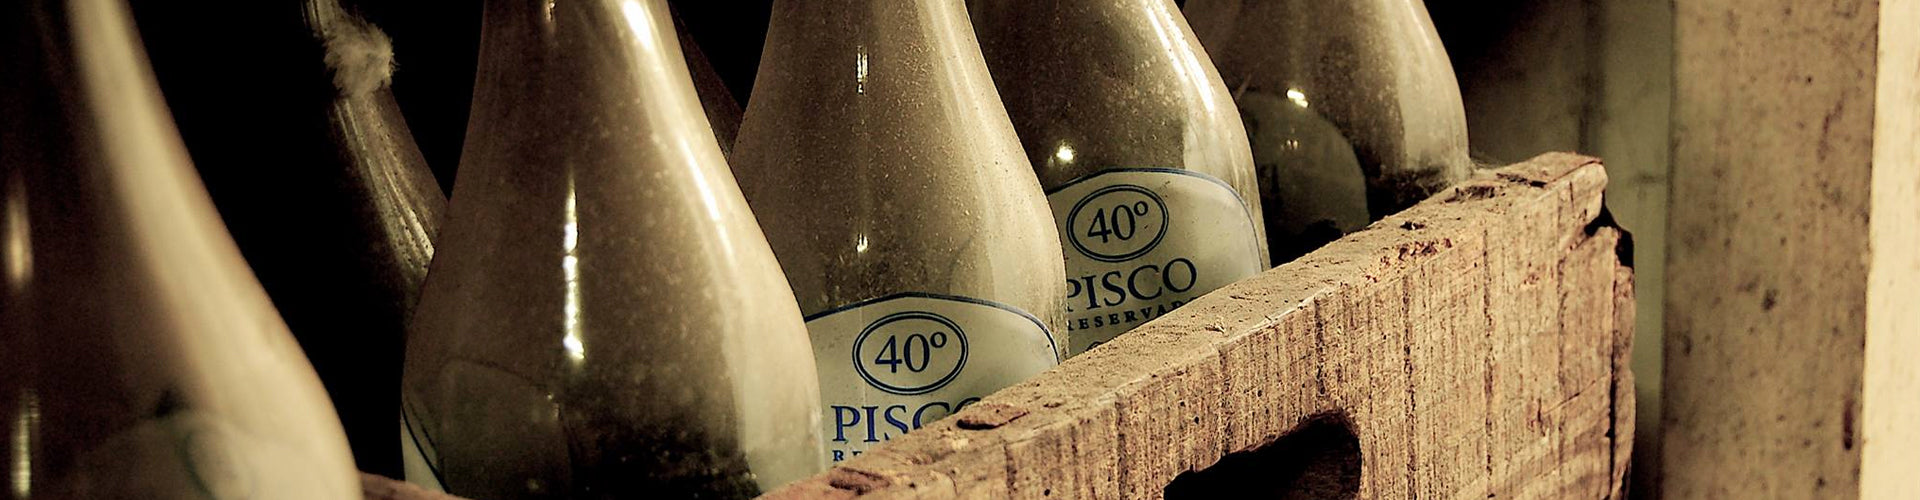 Antique Pisco Bottles in Cellar